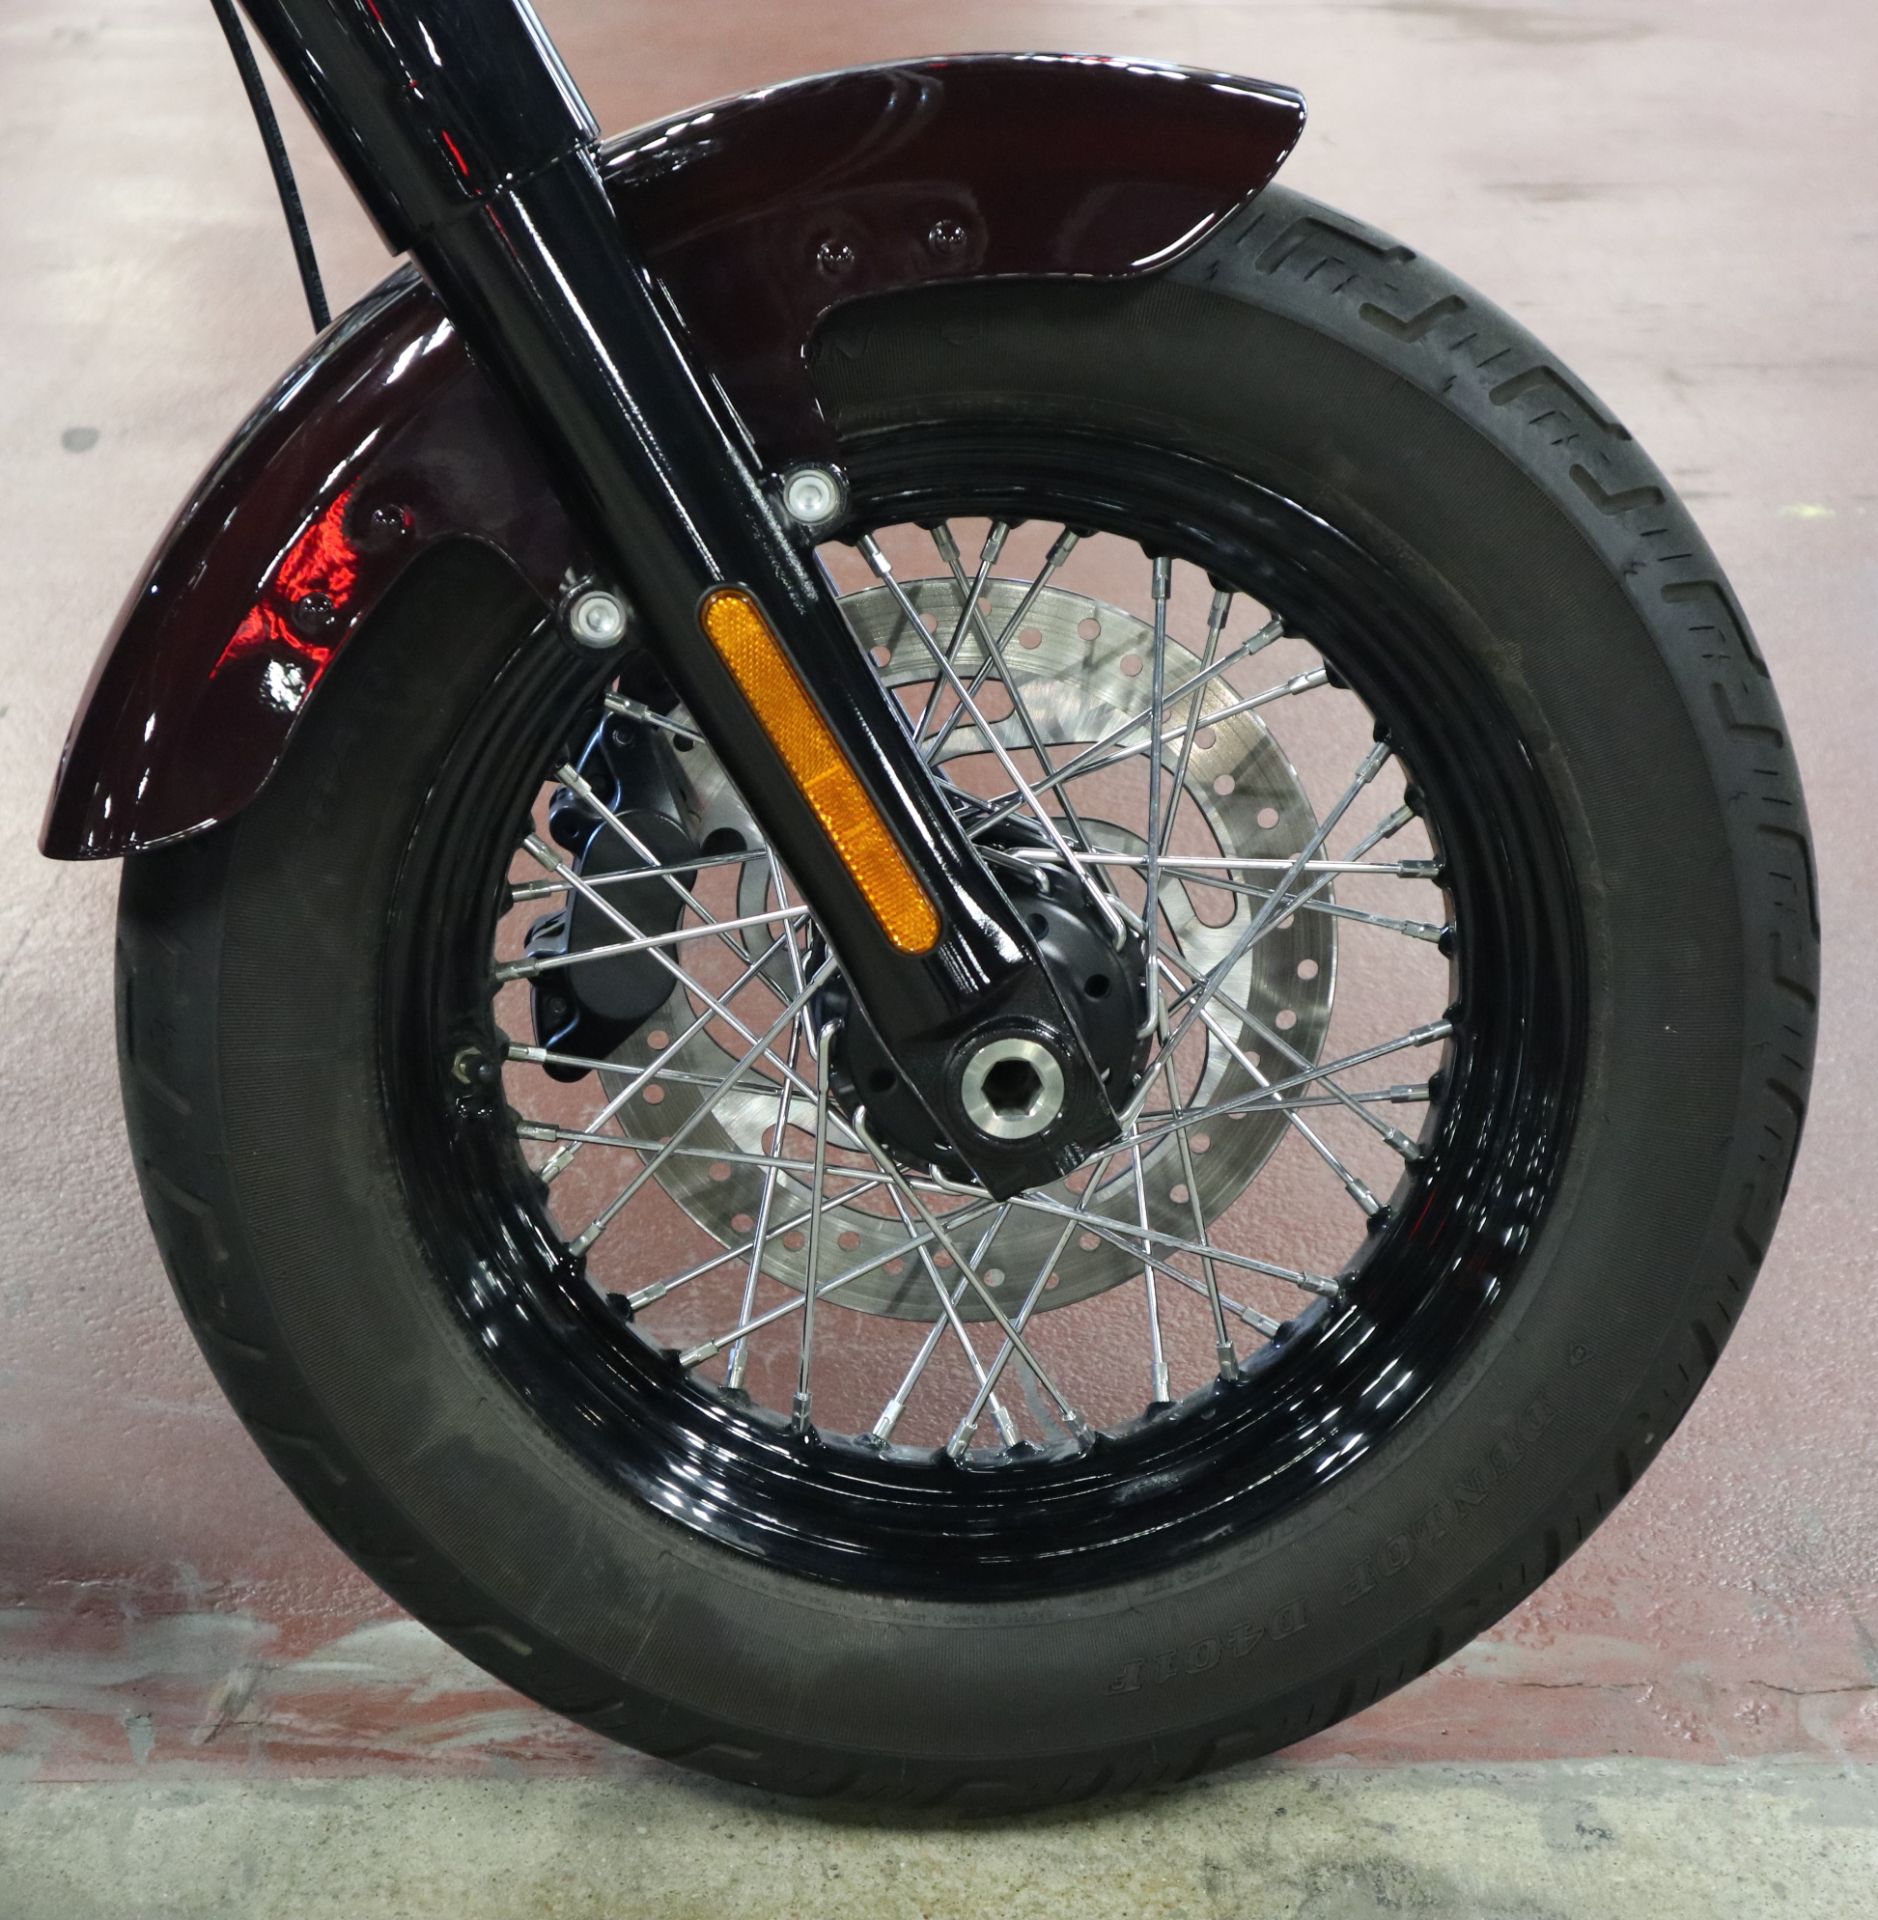 2021 Harley-Davidson Softail Slim® in New London, Connecticut - Photo 13